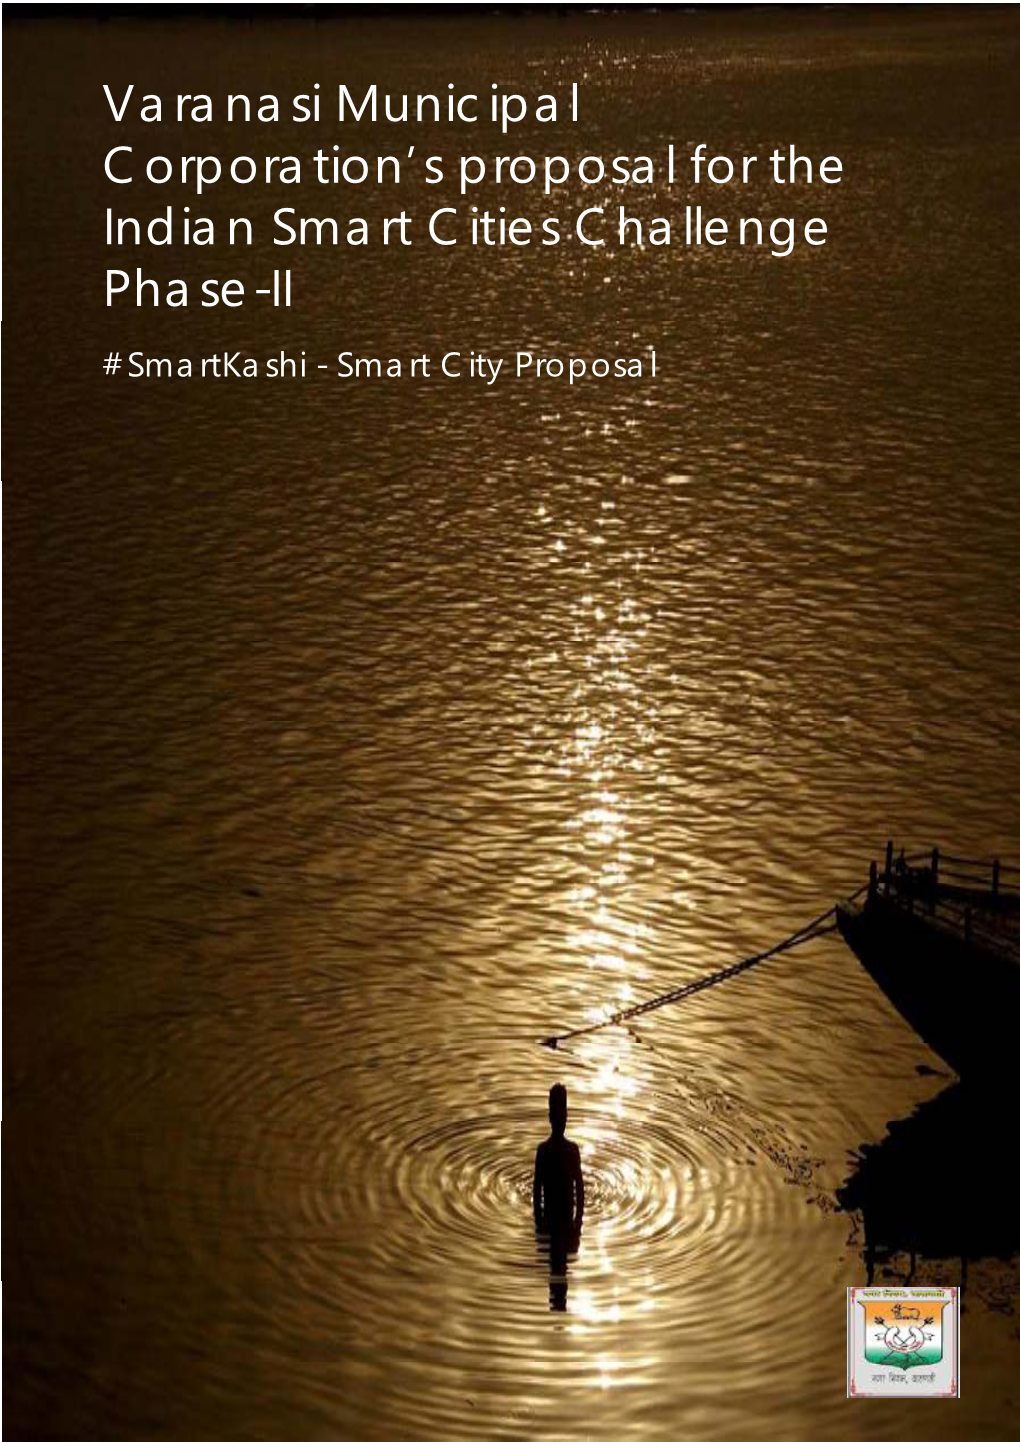 Varanasi Municipal Corporation’S Proposal for the Indian Smart Cities Challenge Phase-II #Smartkashi - Smart City Proposal